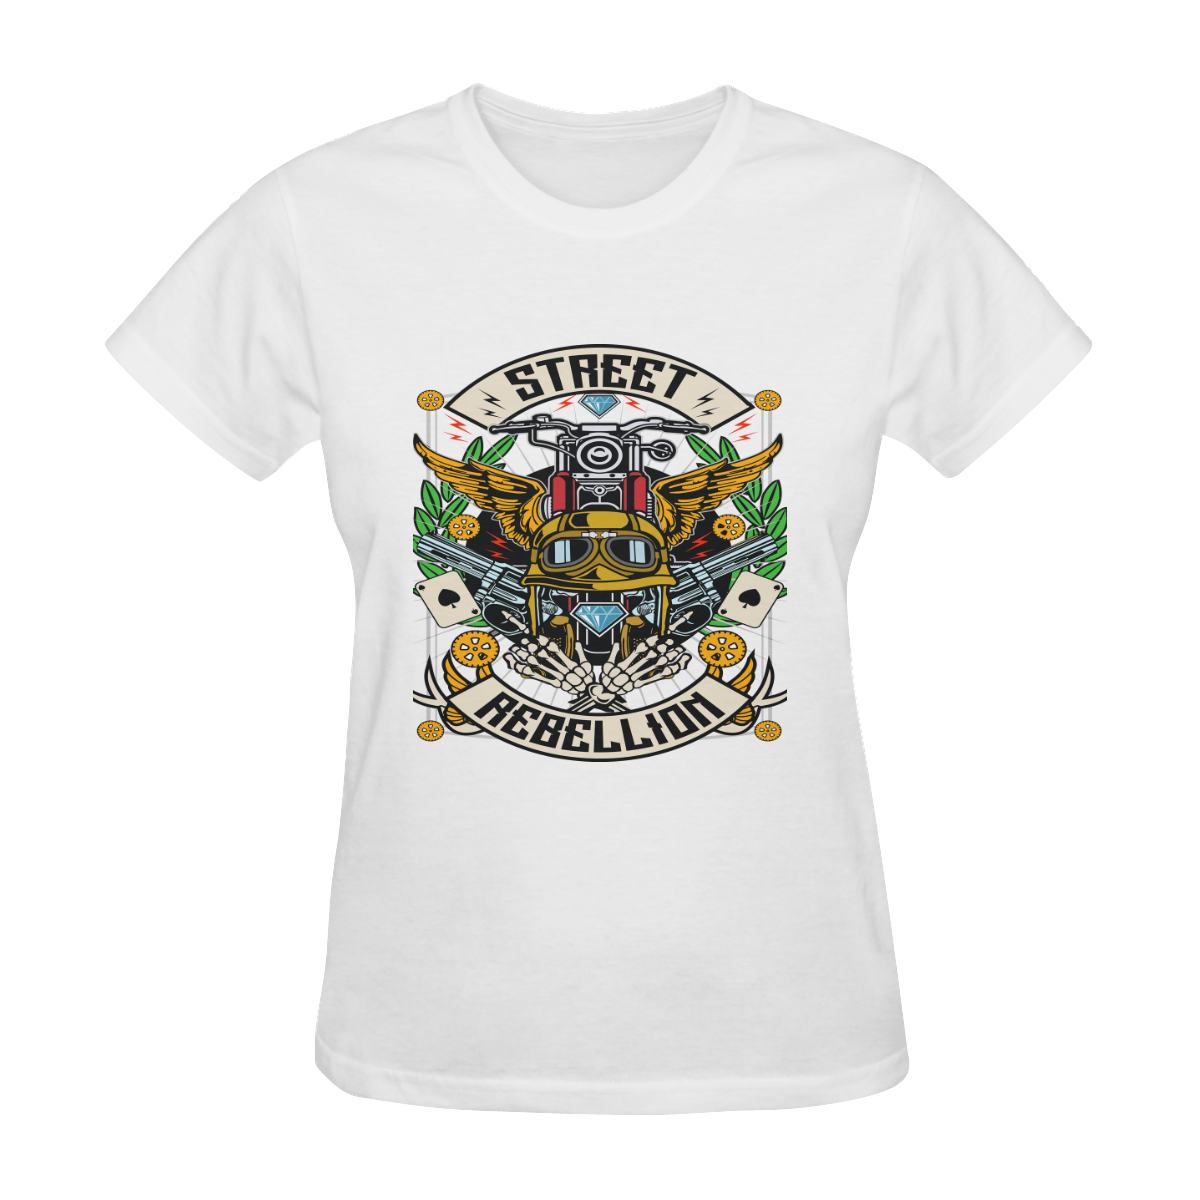 Street Rebellion Modern 2 White Women's T-Shirt in USA Size (Two Sides Printing)